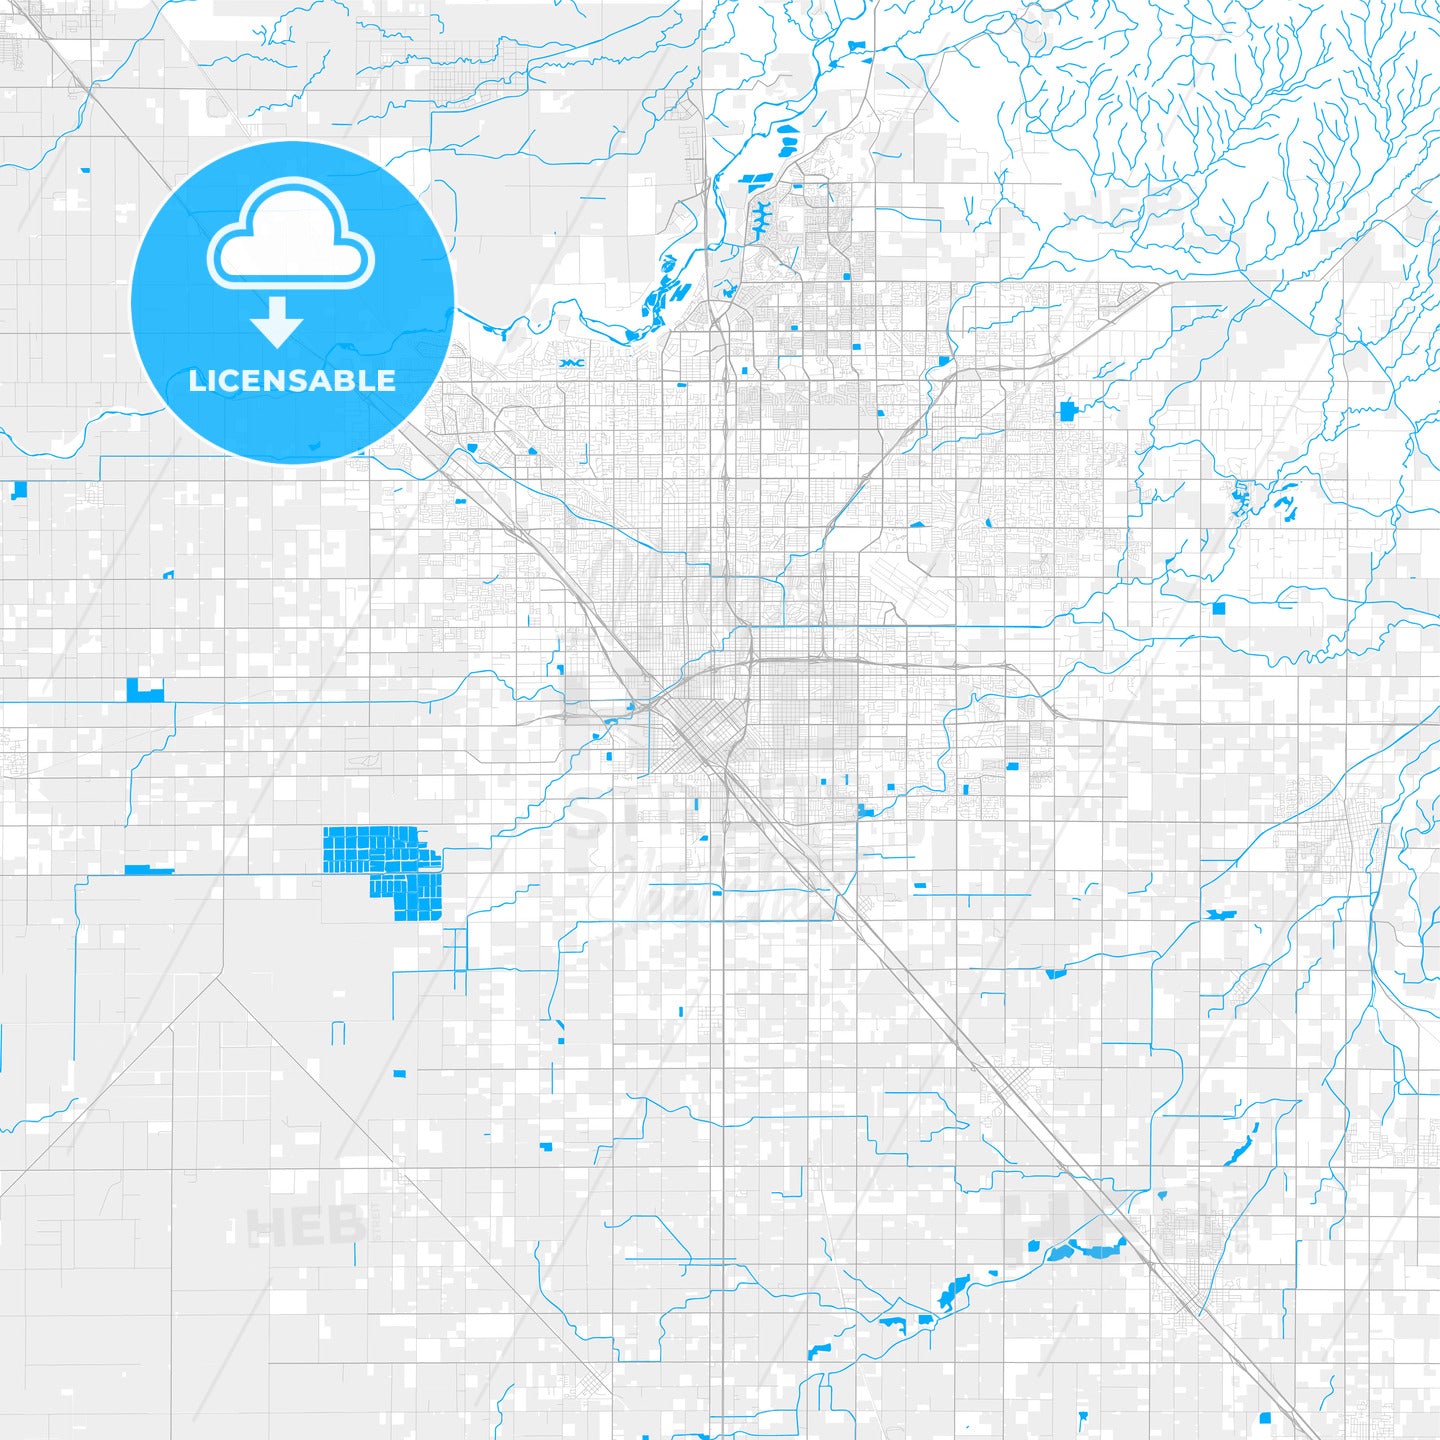 Rich detailed vector map of Fresno, California, U.S.A.